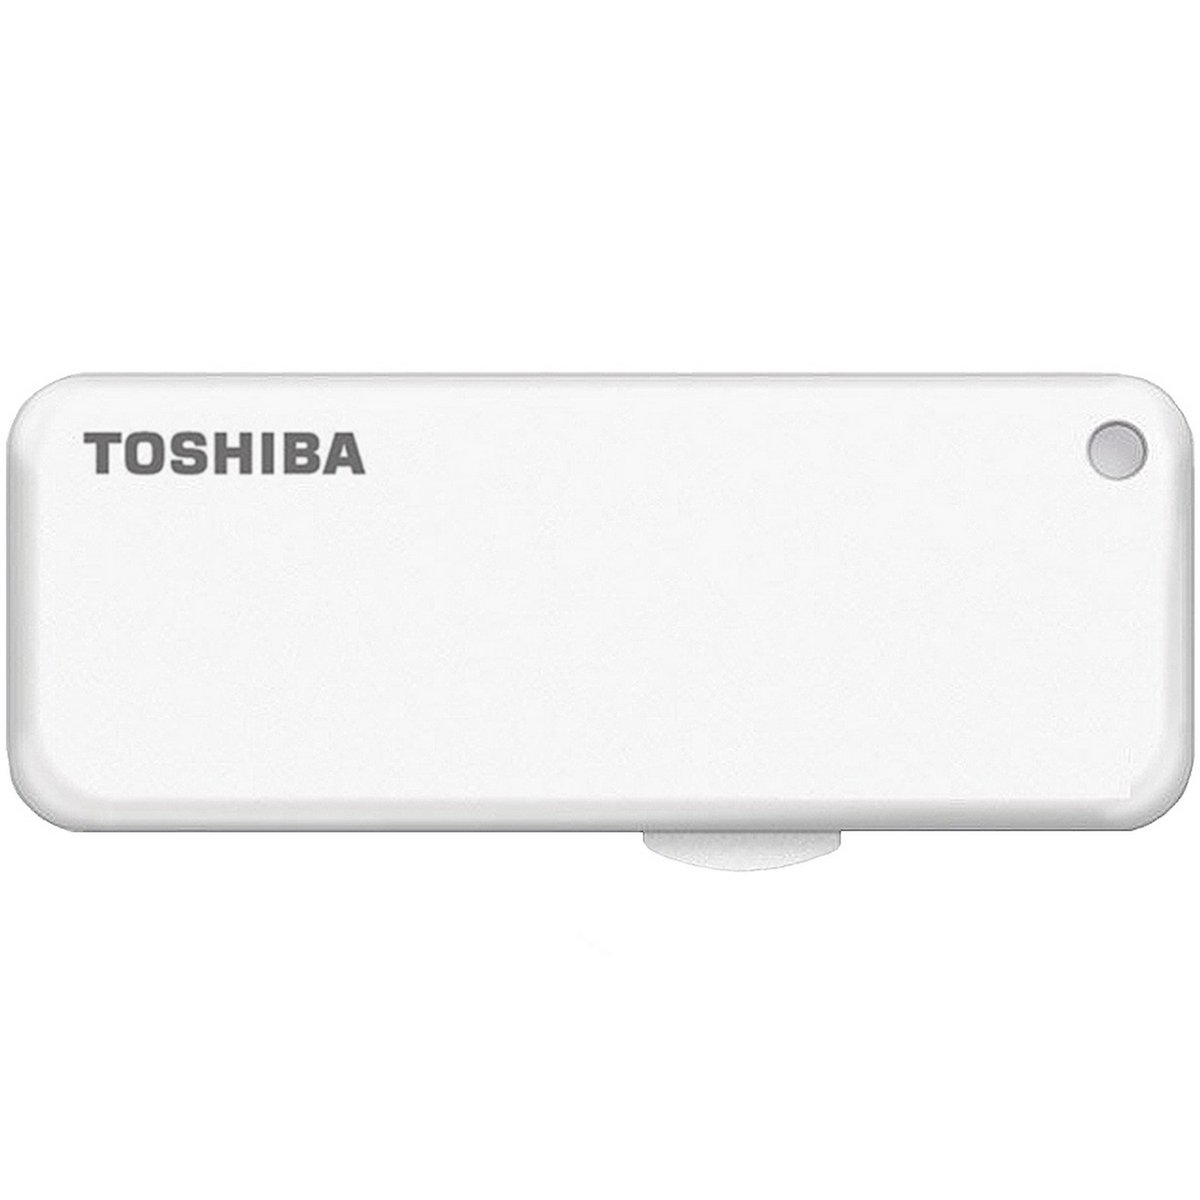 Toshiba Flash Drive TM-U203W 16GB